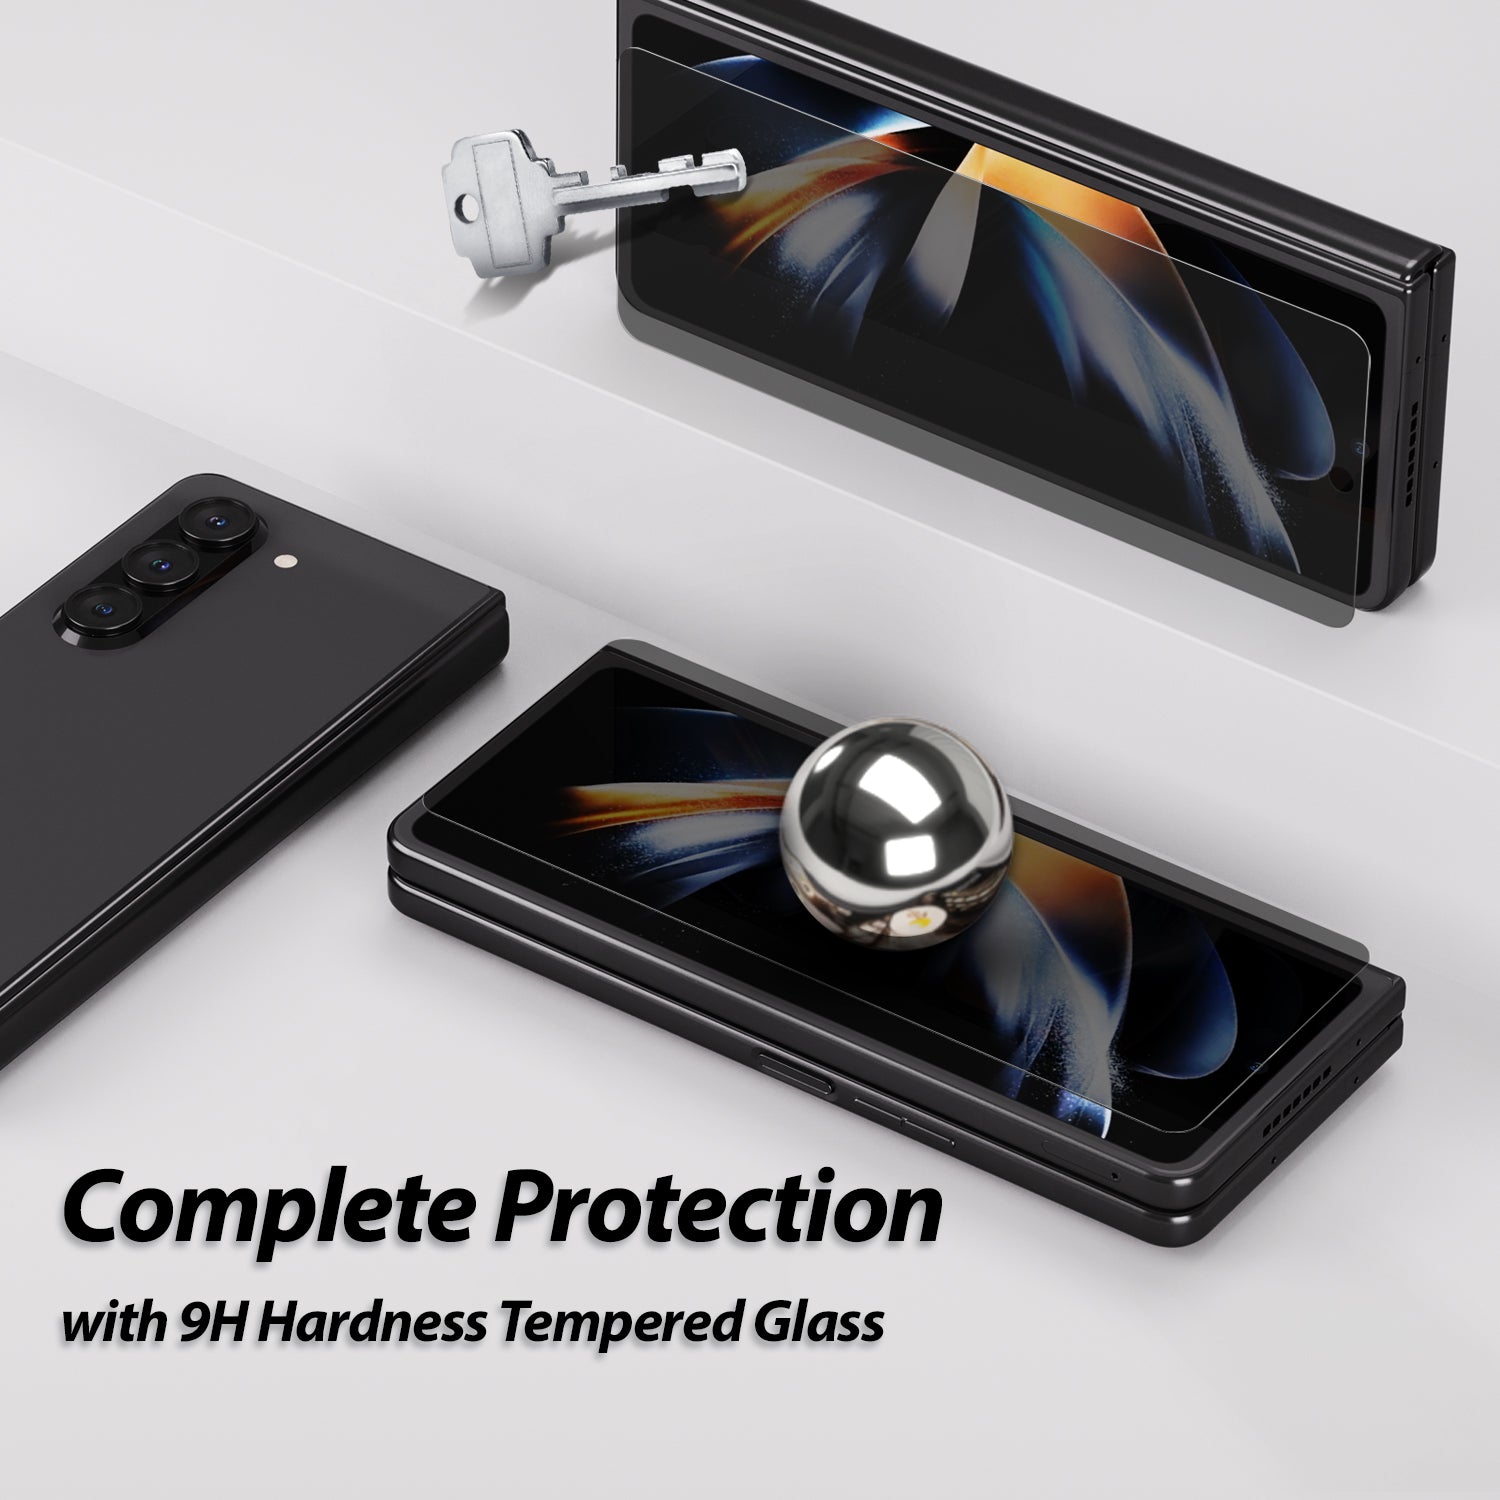 EA Privacy Glass Screen Protector (2 piezas) Samsung Galaxy Z Fold 5